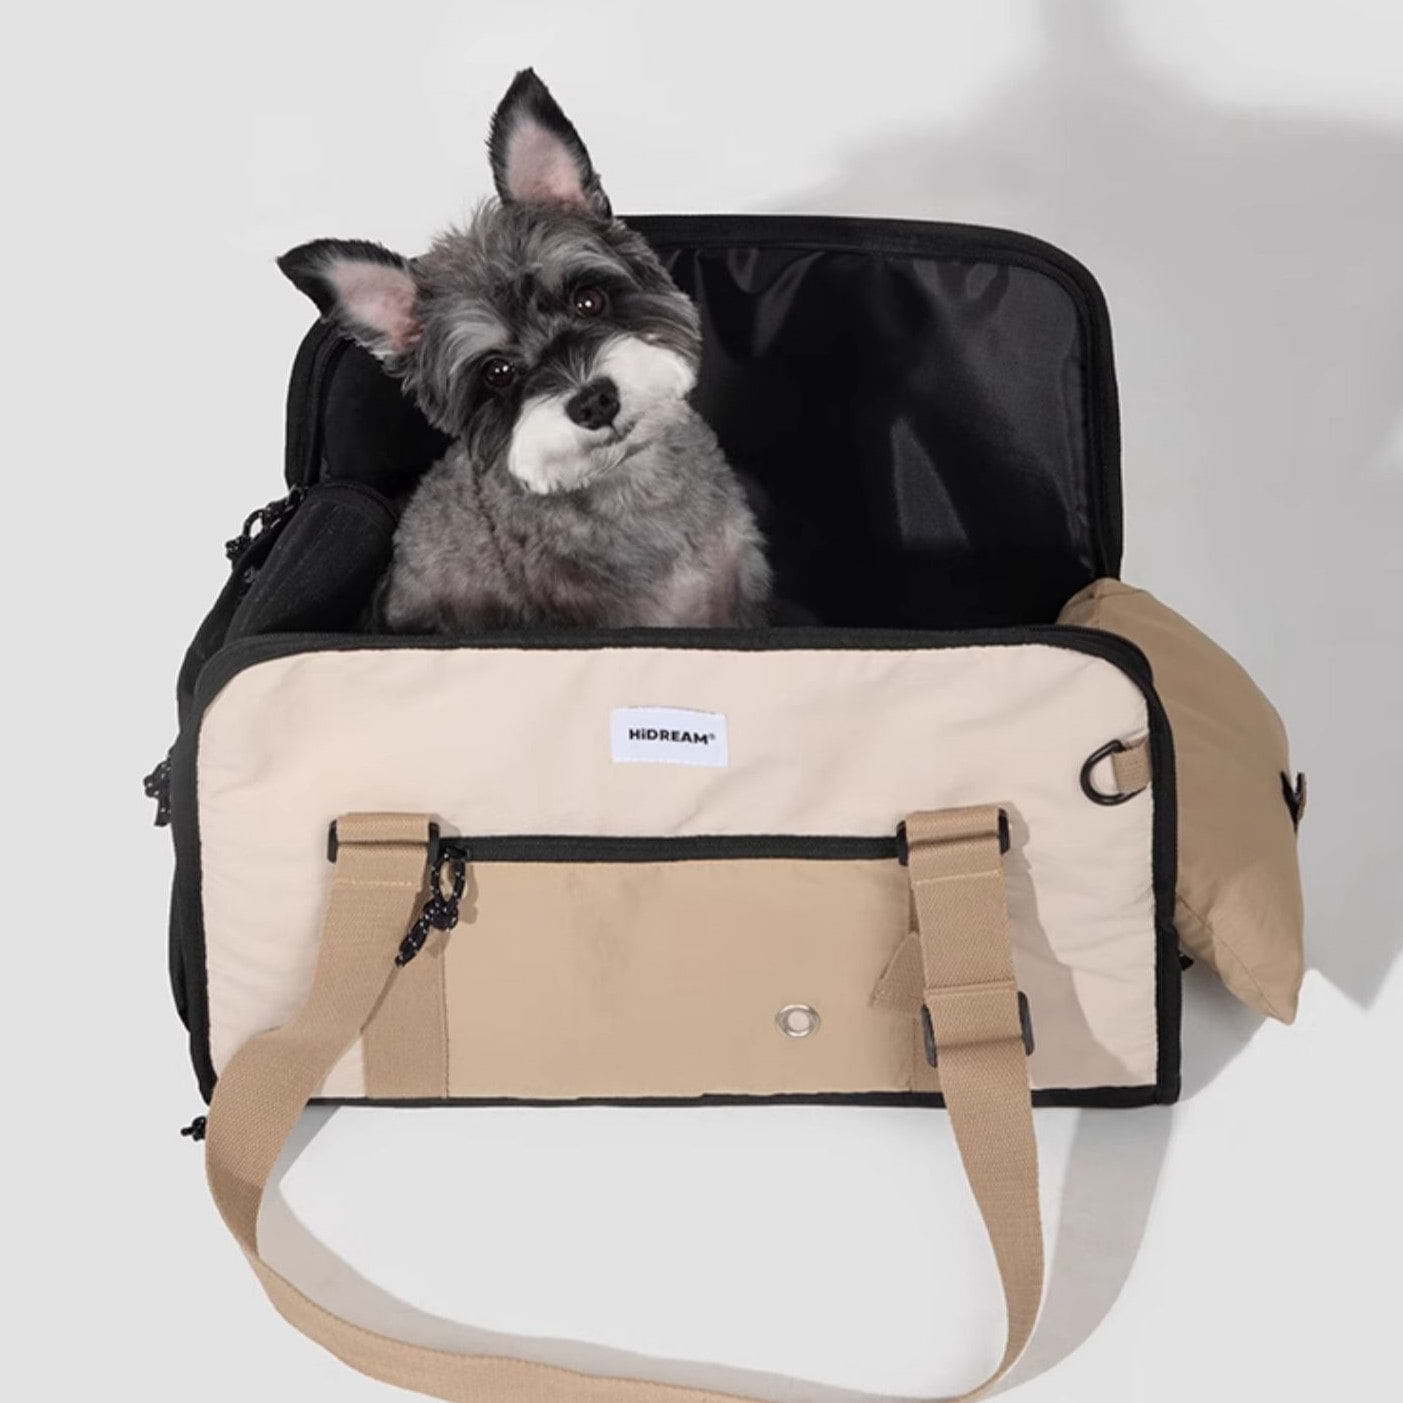 Transform Dream - Pets Carrier Bag - The Dog Dreams Carriers Beige / F